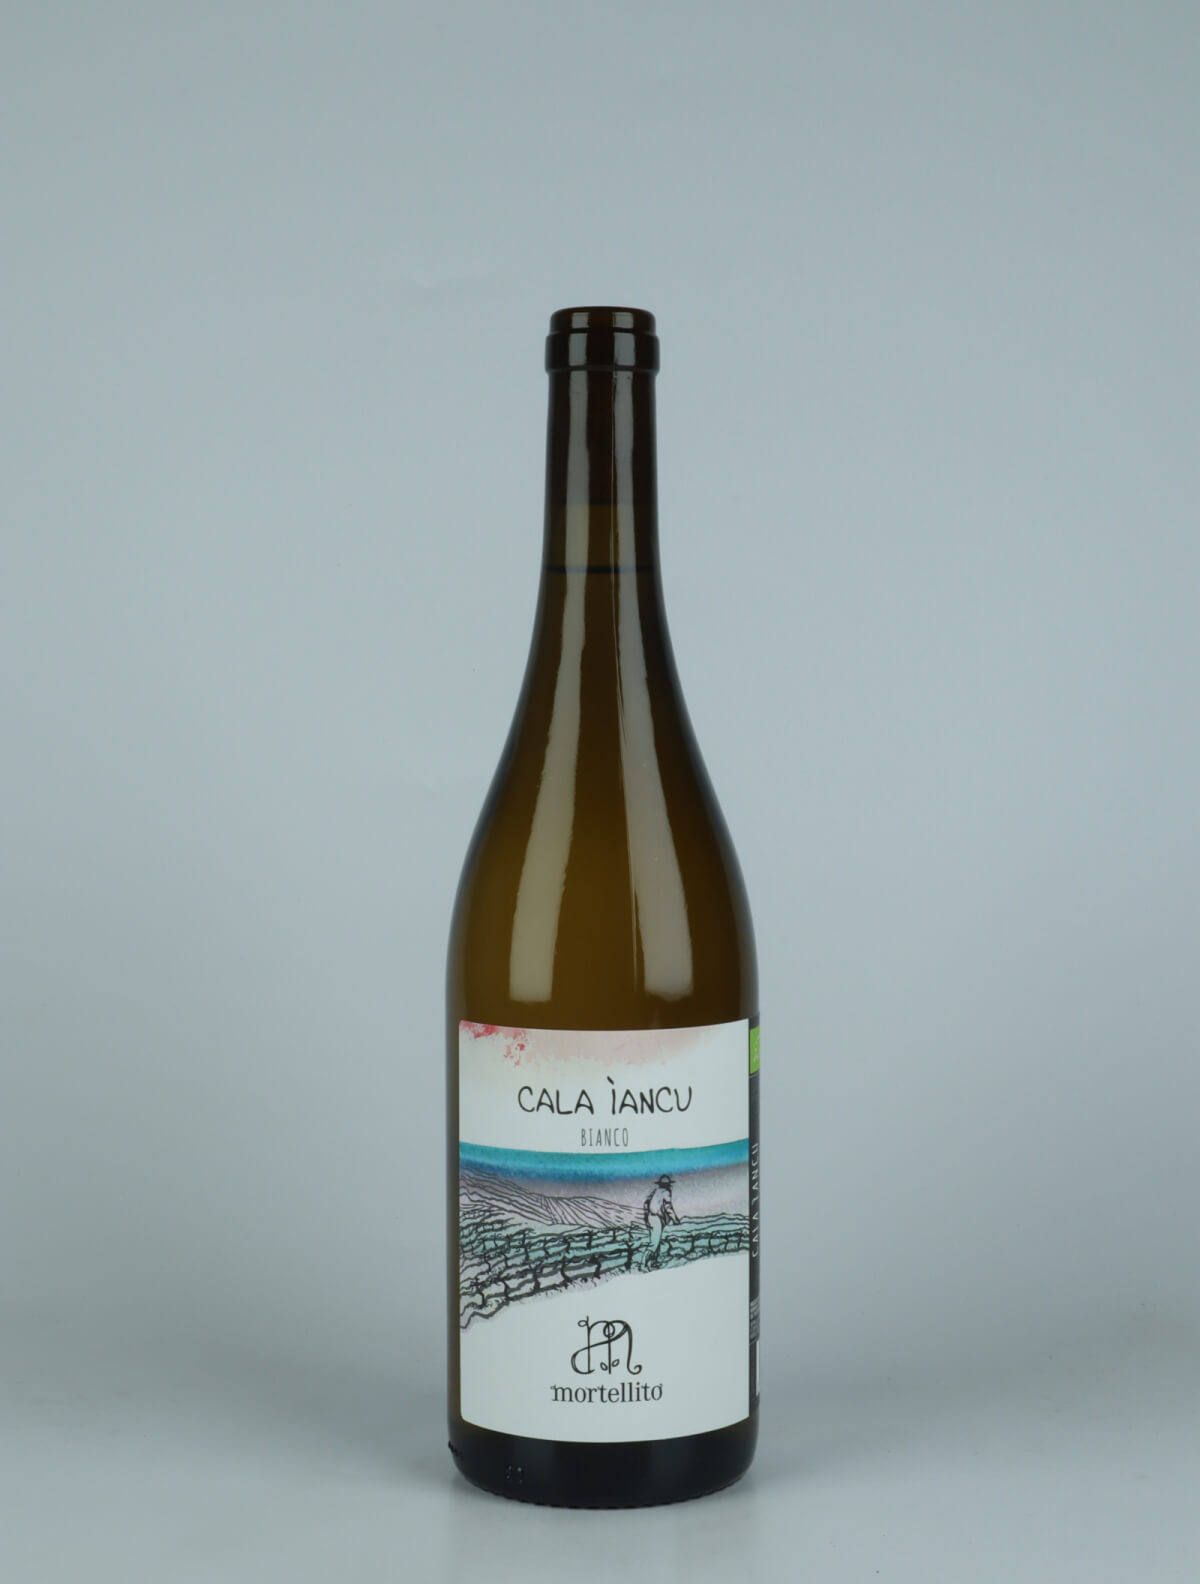 A bottle 2023 Cala Iancu - Bianco White wine from Il Mortellito, Sicily in Italy